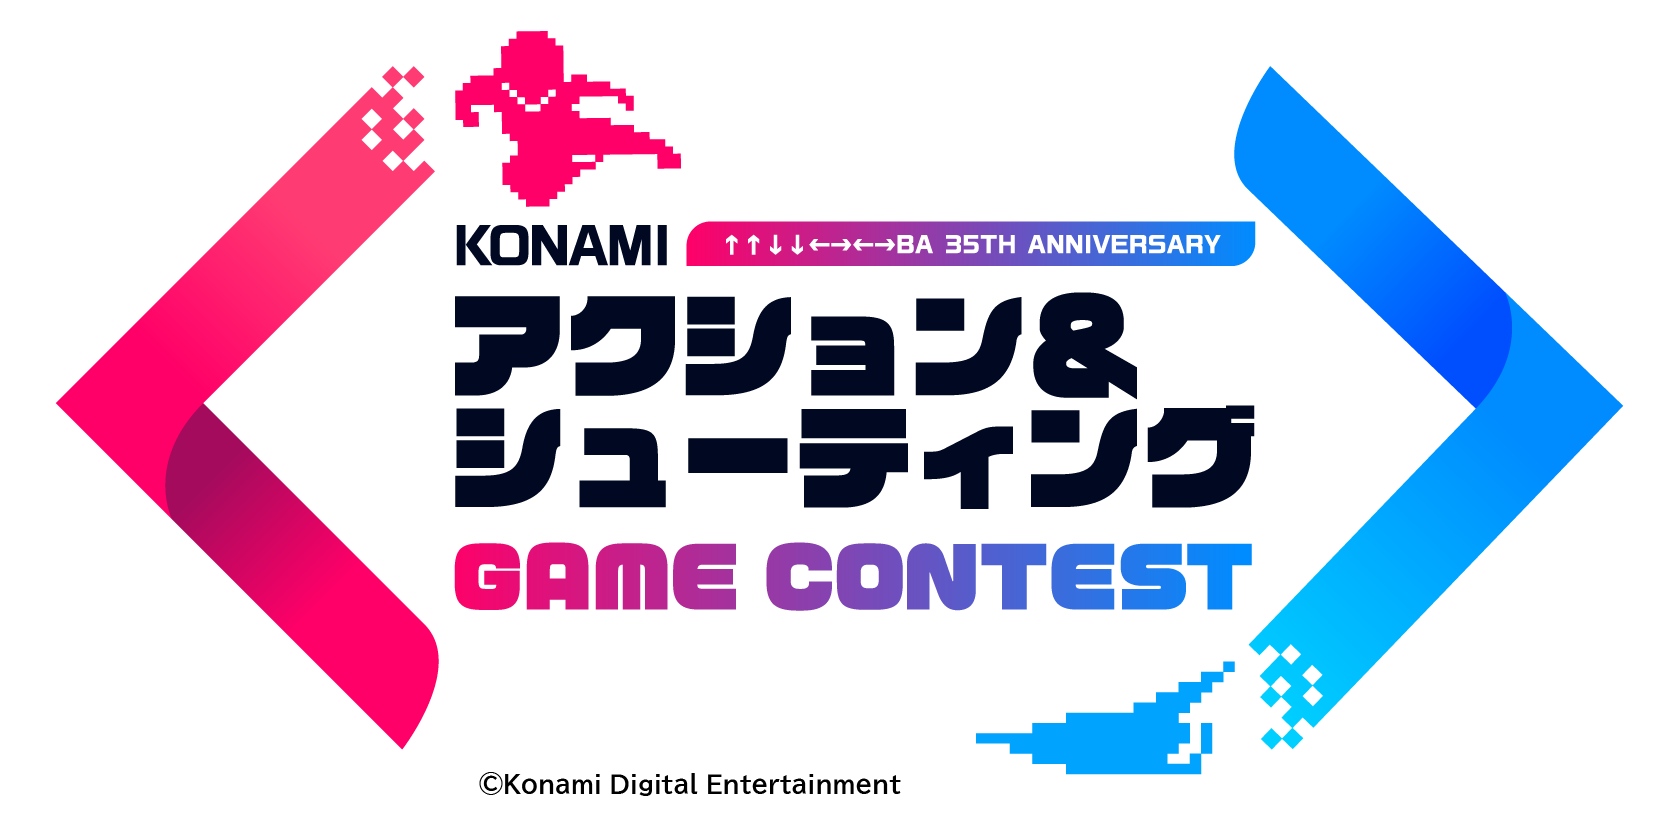 Konamiタイトルを題材にしたゲーム企画を大募集 Konami アクション シューティングゲームコンテスト 開催 対象80タイトルの中から好きな作品を選んでエントリー可能 株式会社コナミ デジタルエンタテインメントのプレスリリース